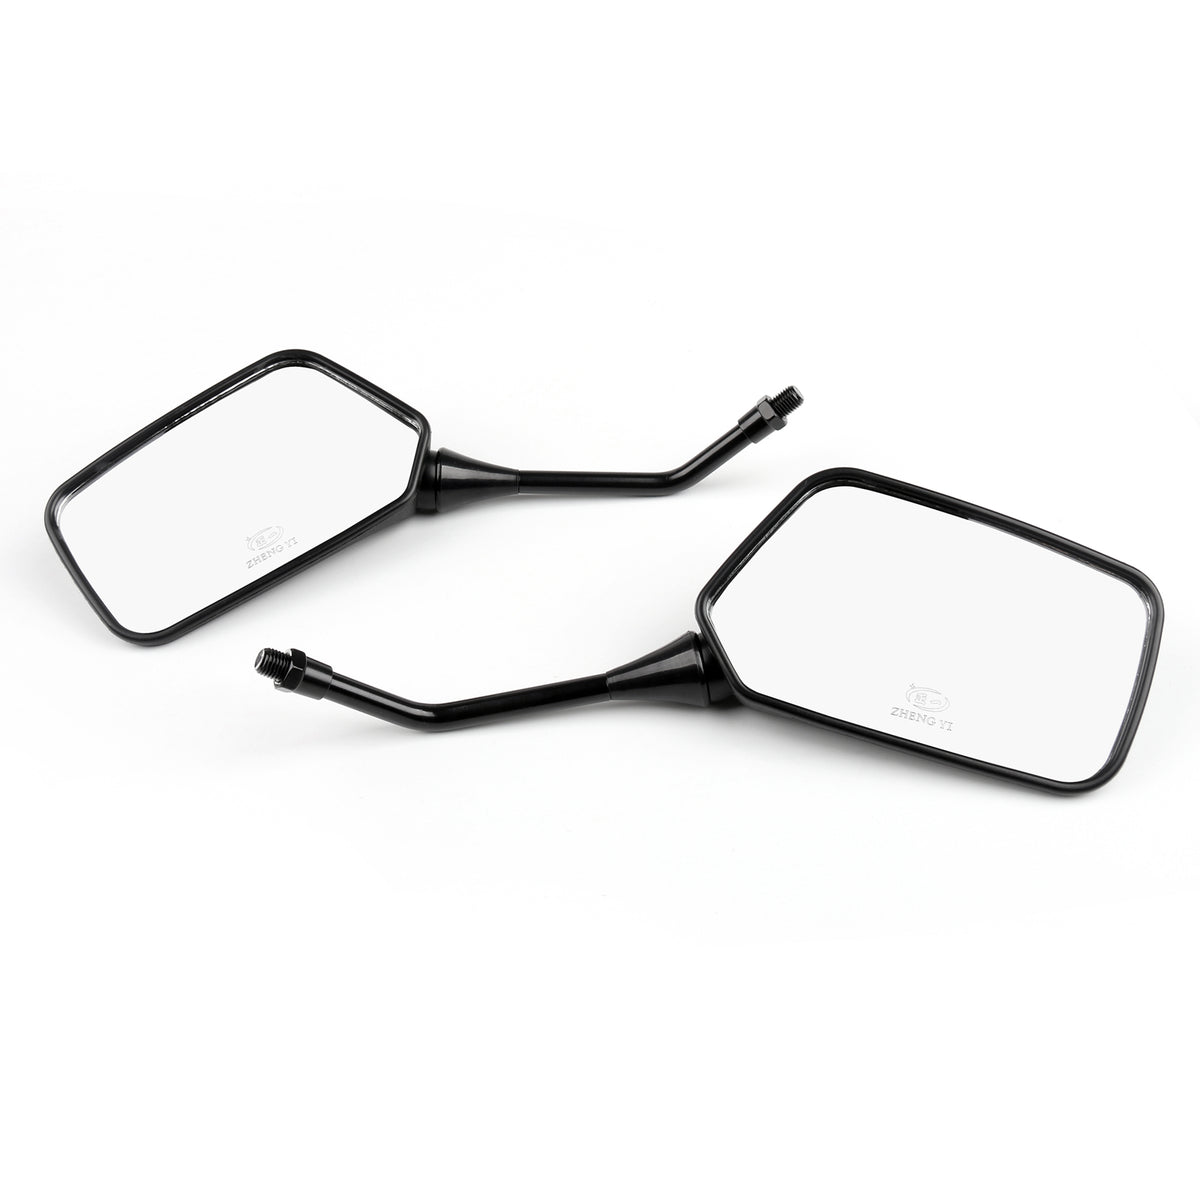 10mm Motocycle Rear View Mirrors For Honda NX125 88-97 CB250 Nighthawk 91-08 Generic